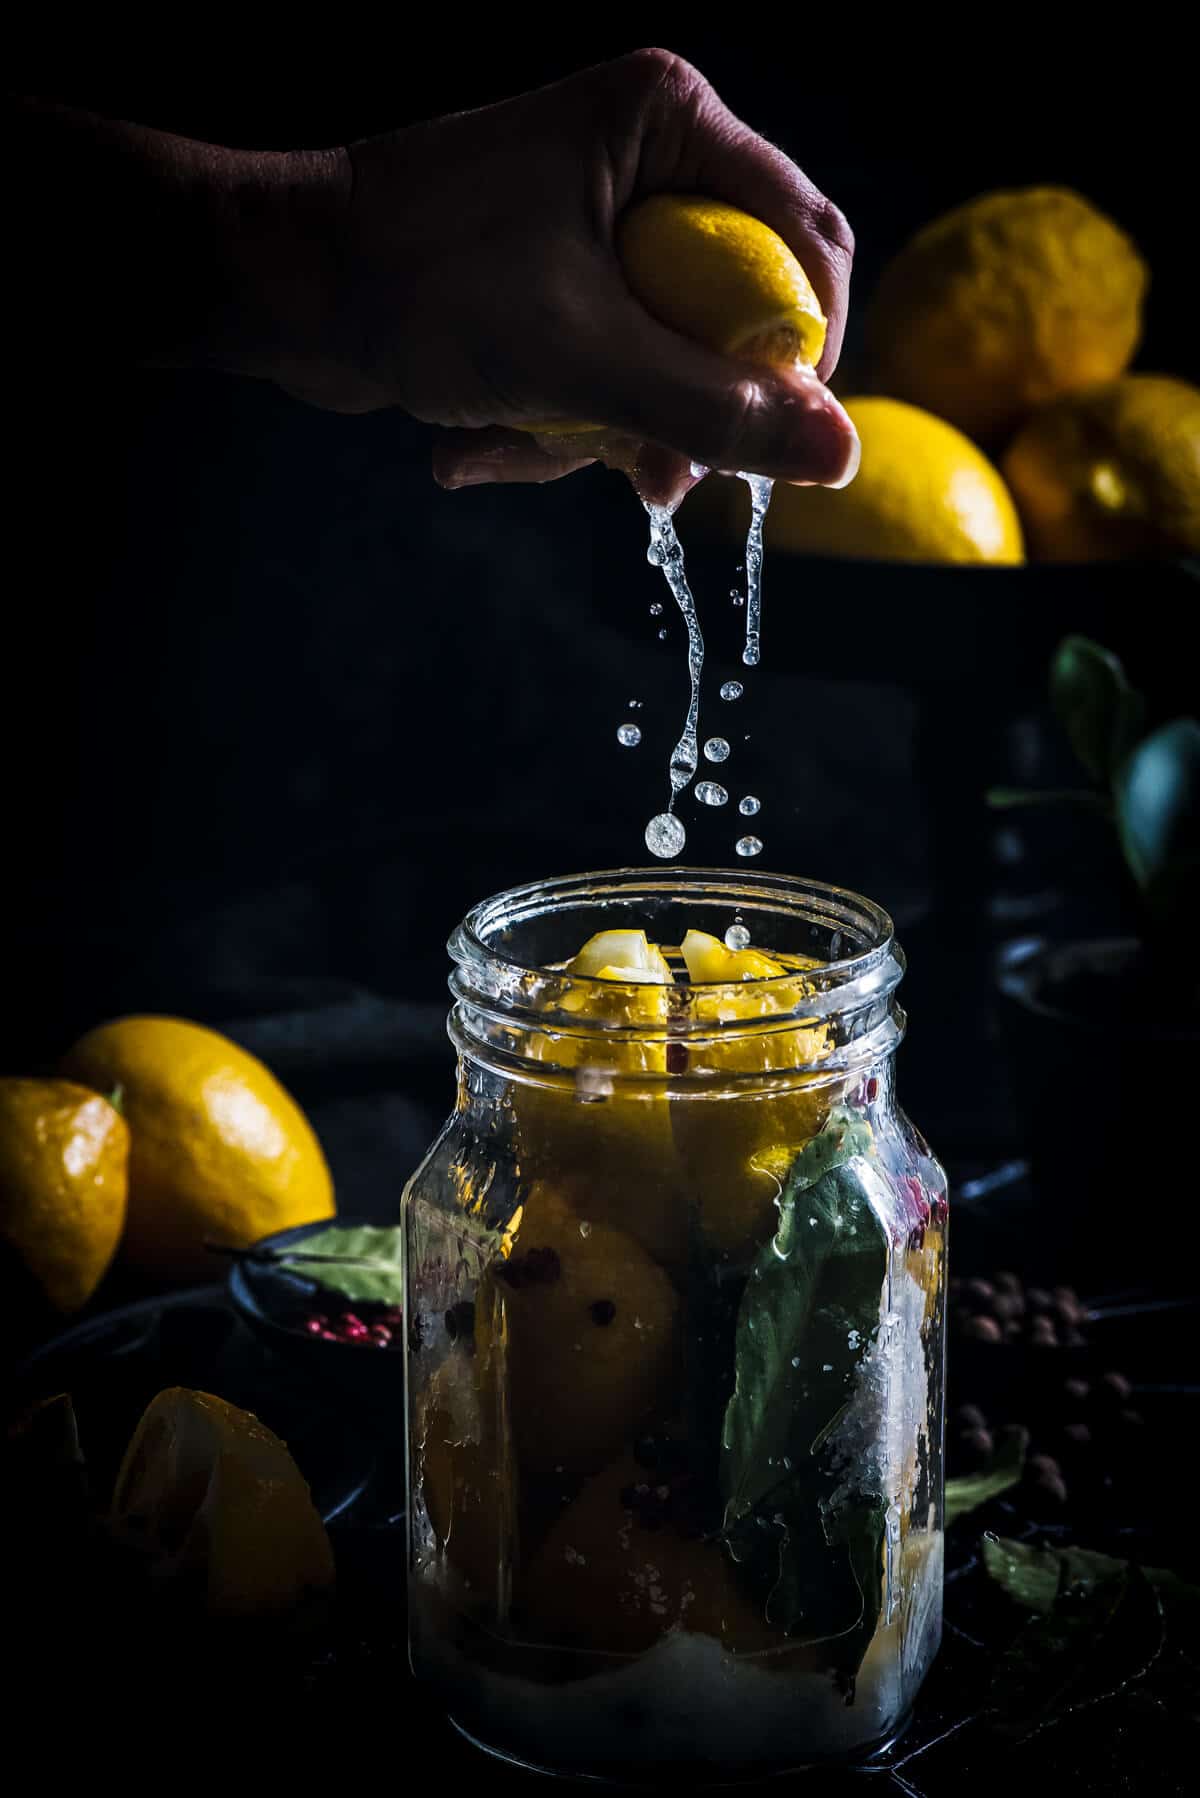 Squeezing lemon juice